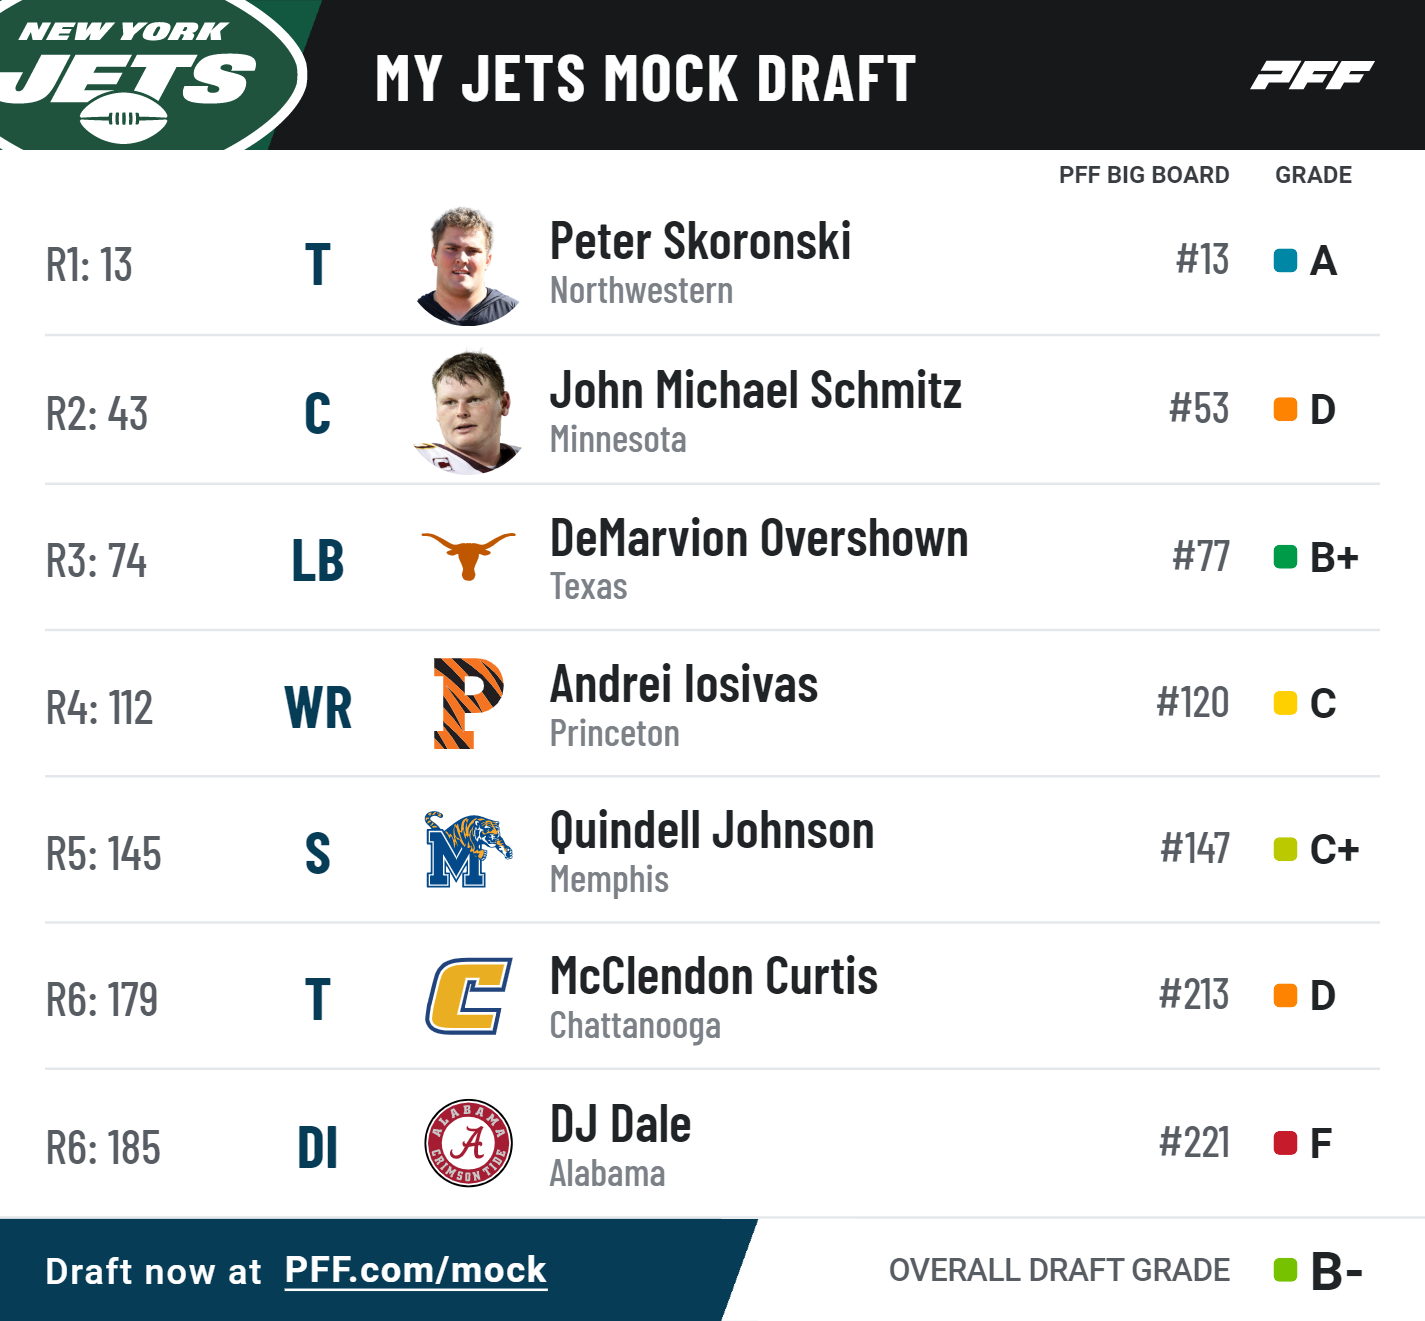 My Jets Mock Draft